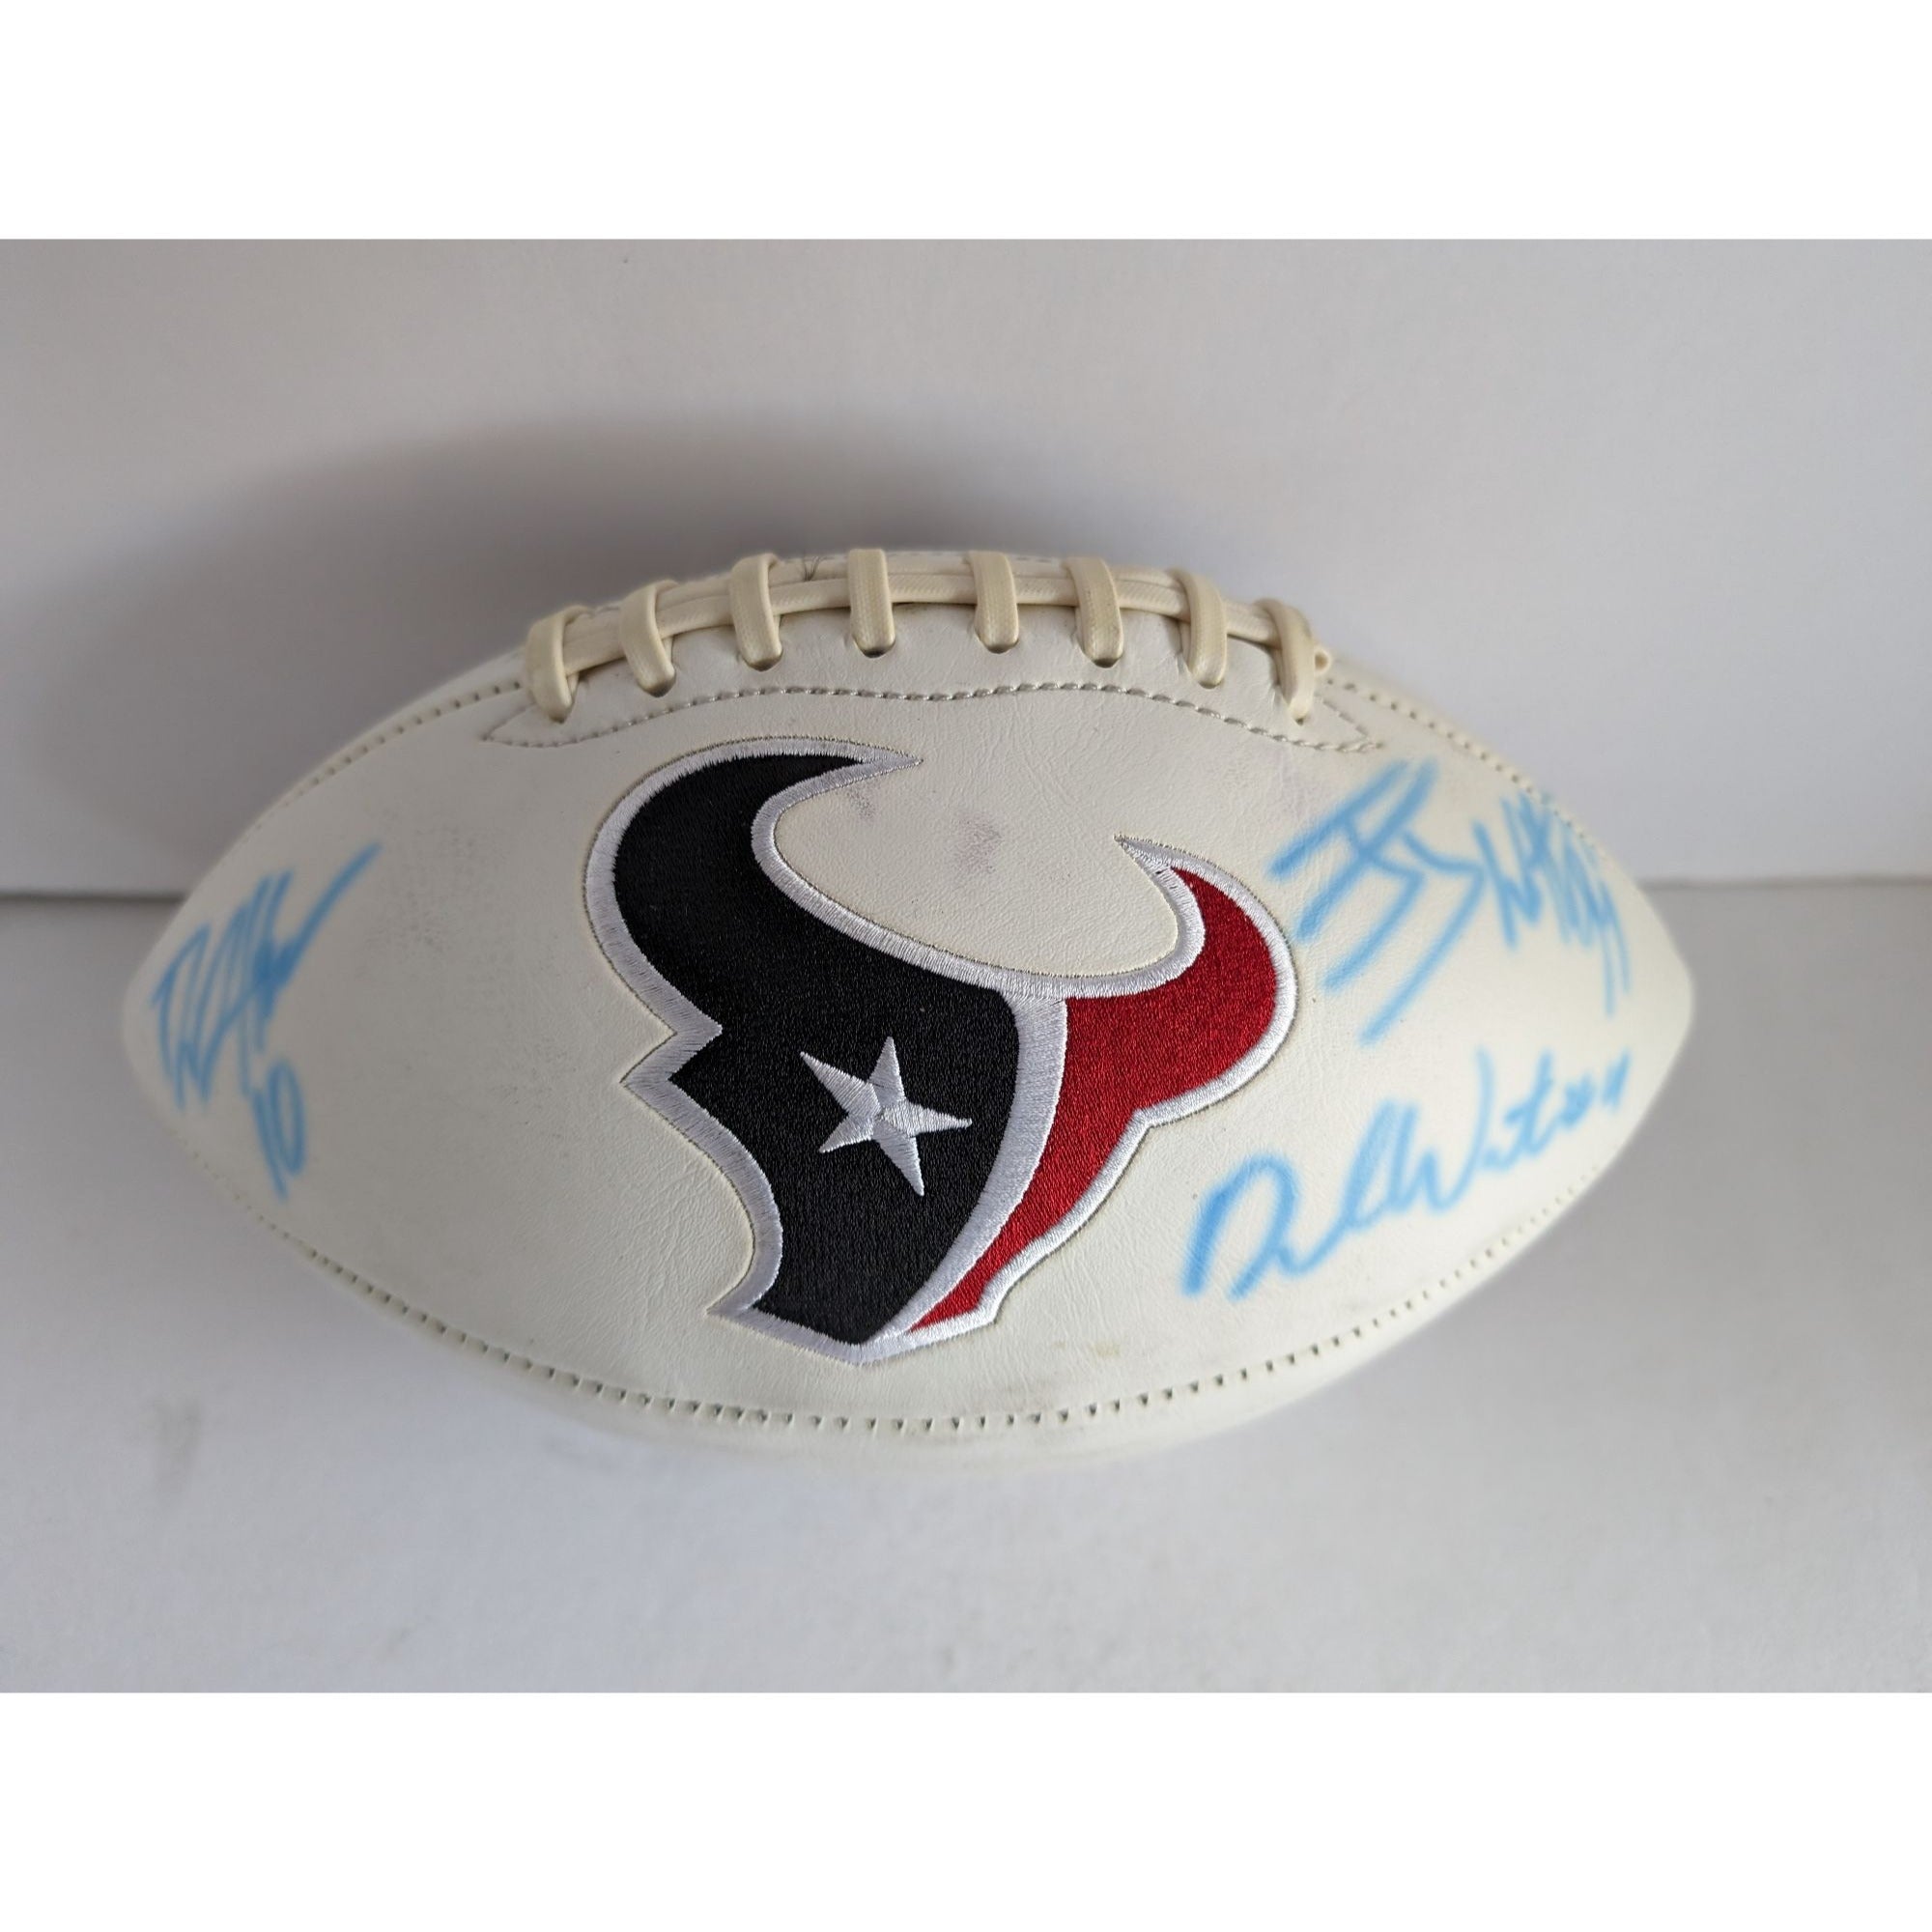 Houston Texans JJ Watt DeShaun Watson Andre Johnson full size football signed